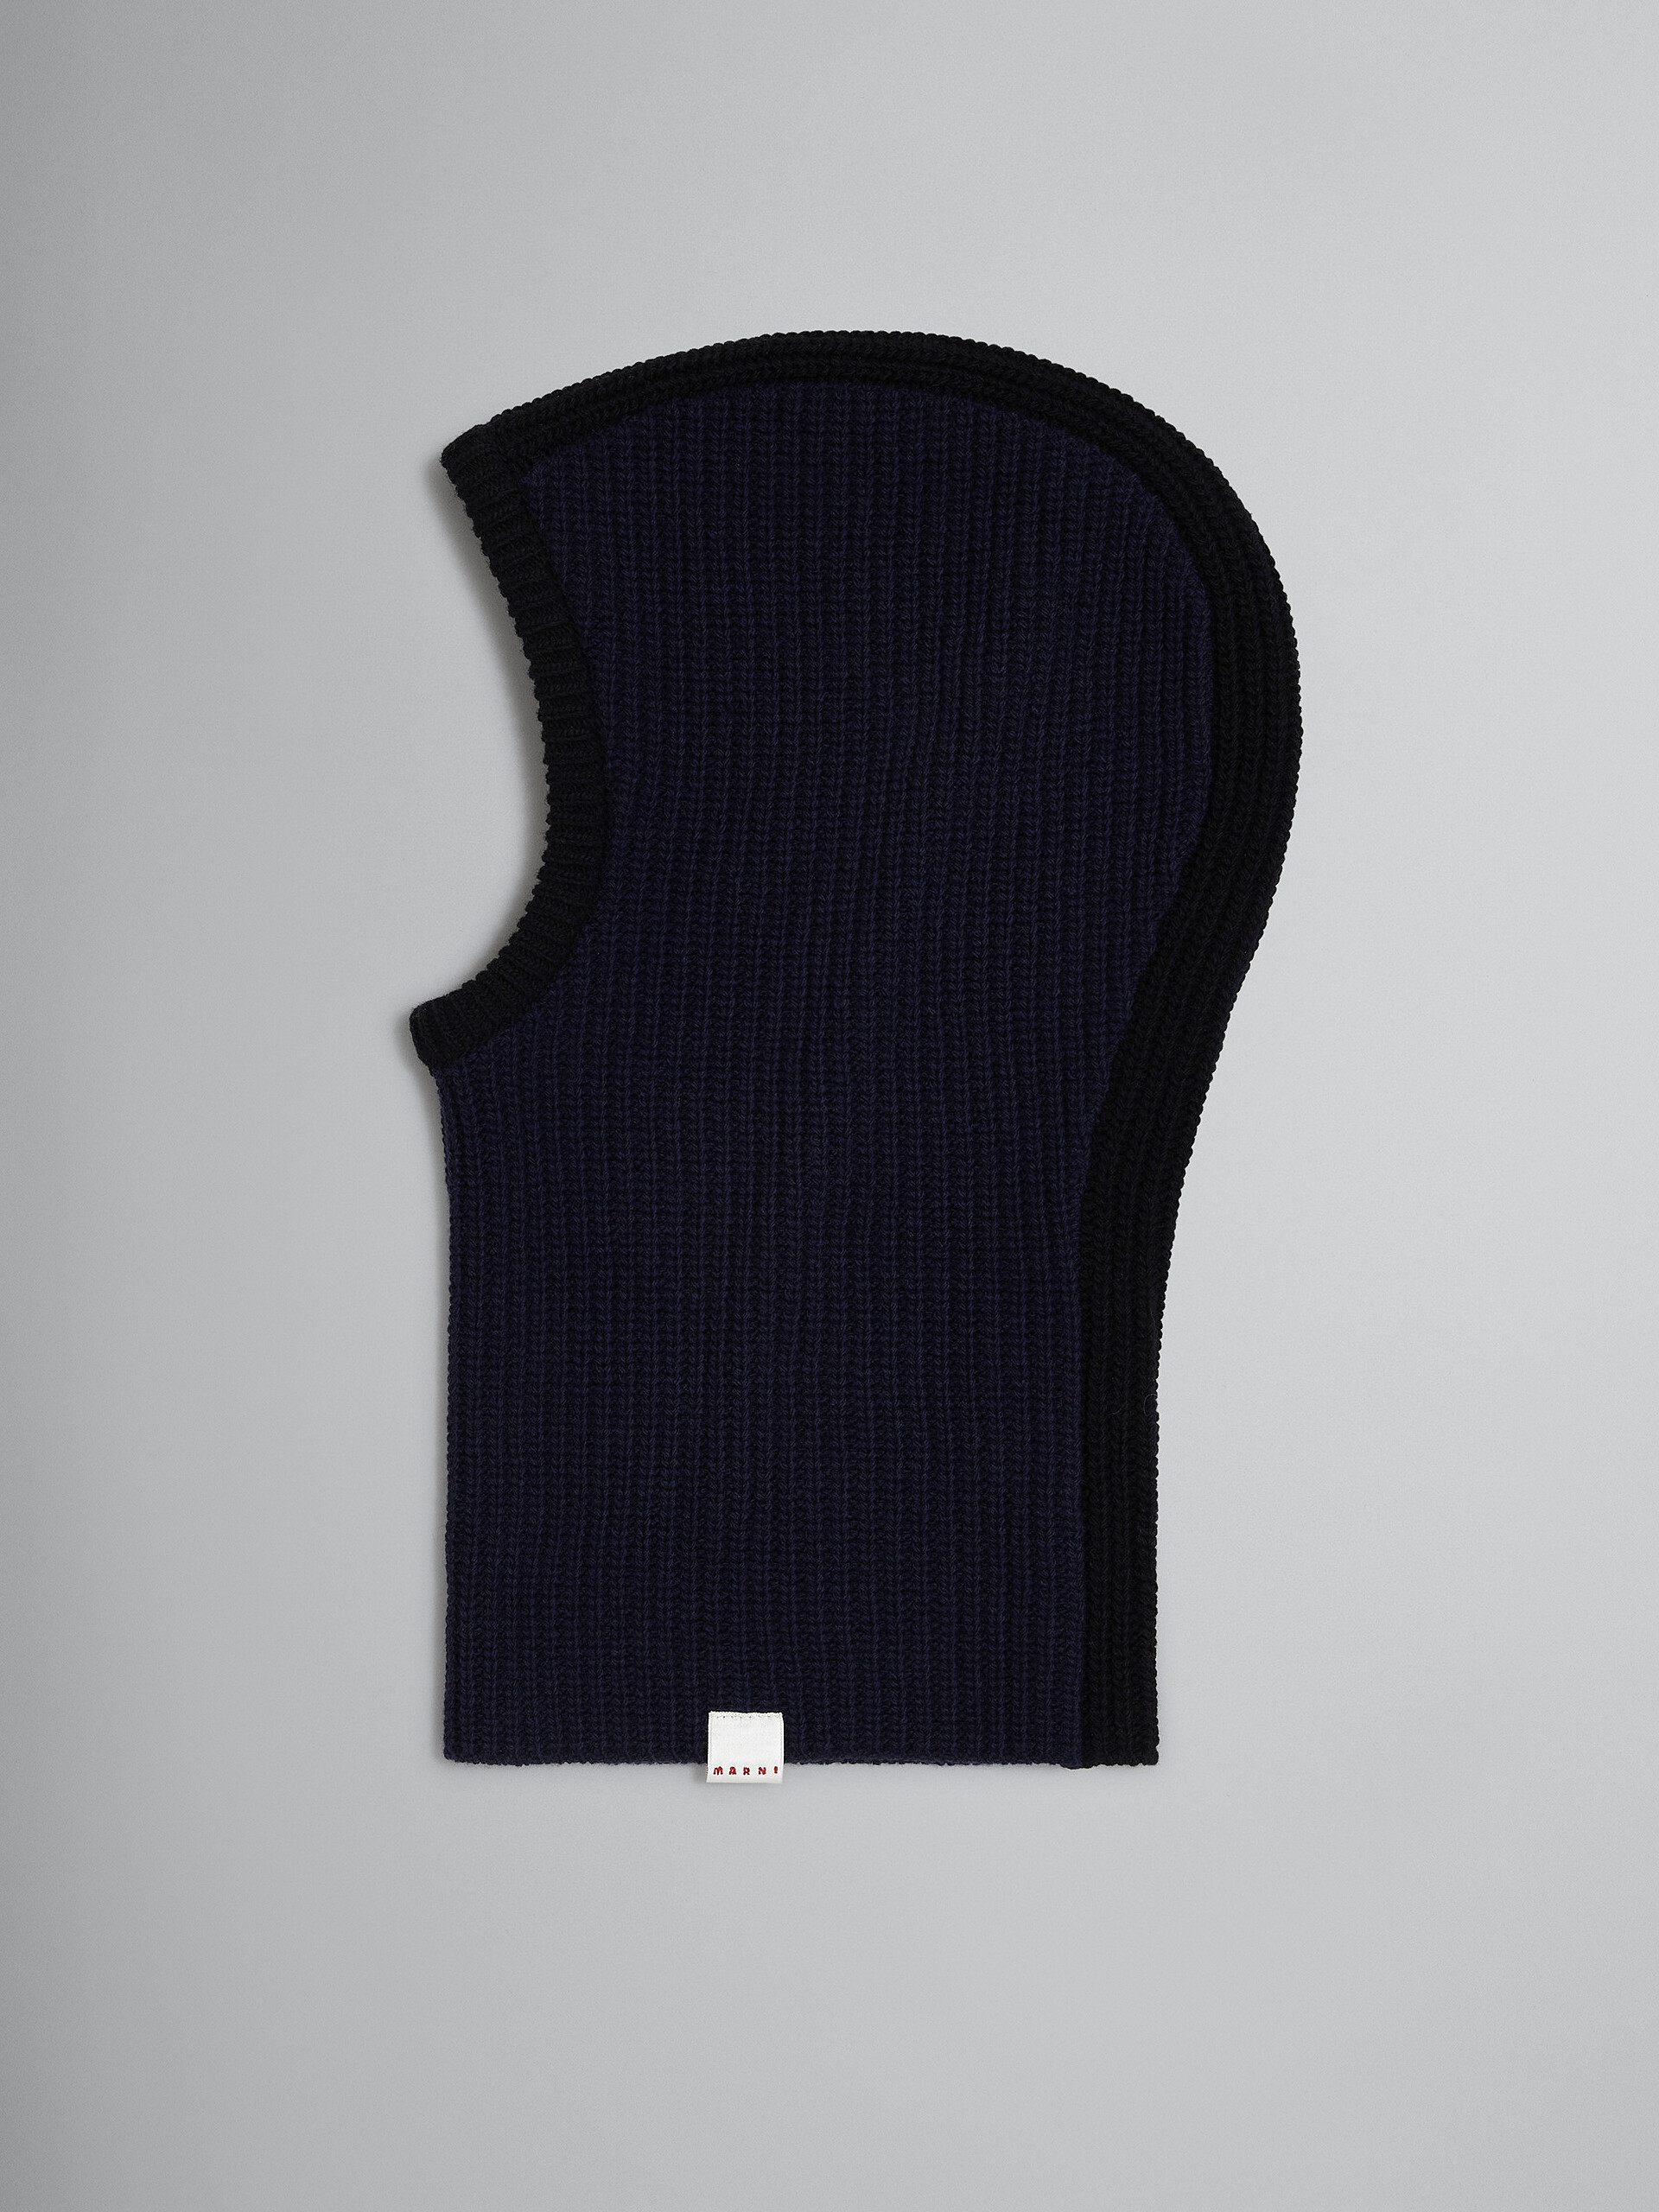 Passamontagna in lana Shetland blu - Altri accessori - Image 1